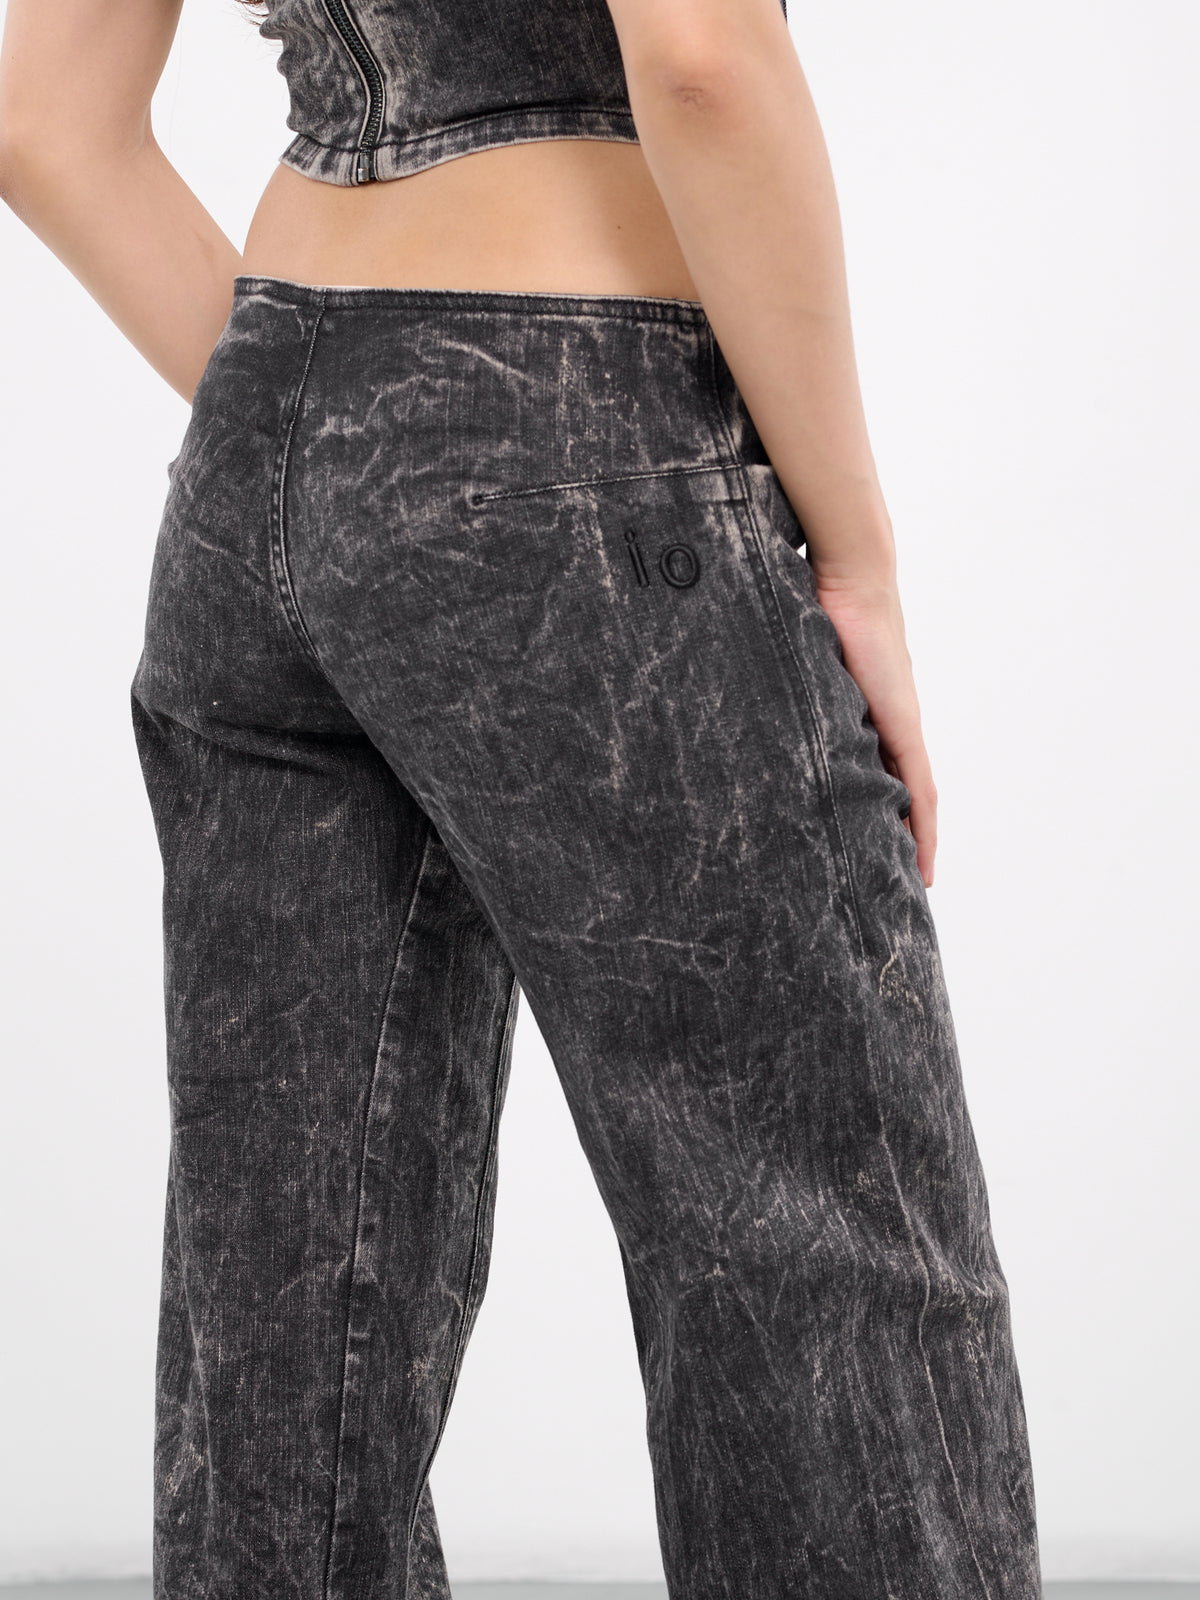 Inverted Tuxedo Pants (TR30-1-BLACK-ASH-WASH)